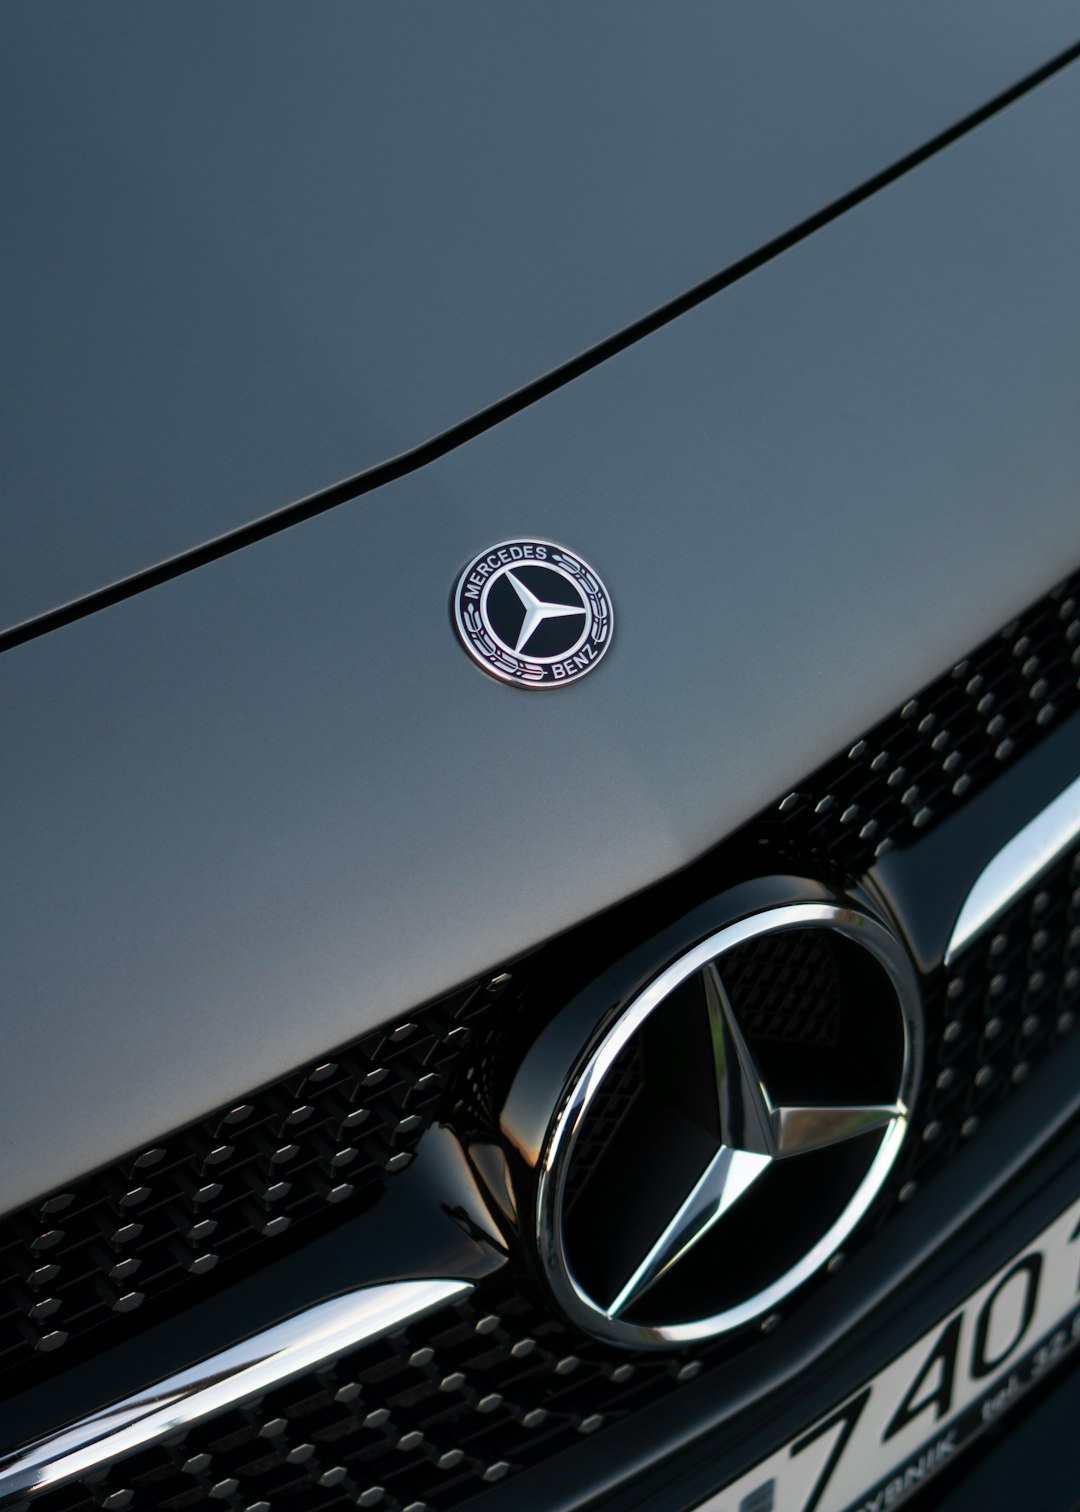 silver mercedes benz emblem on gray car